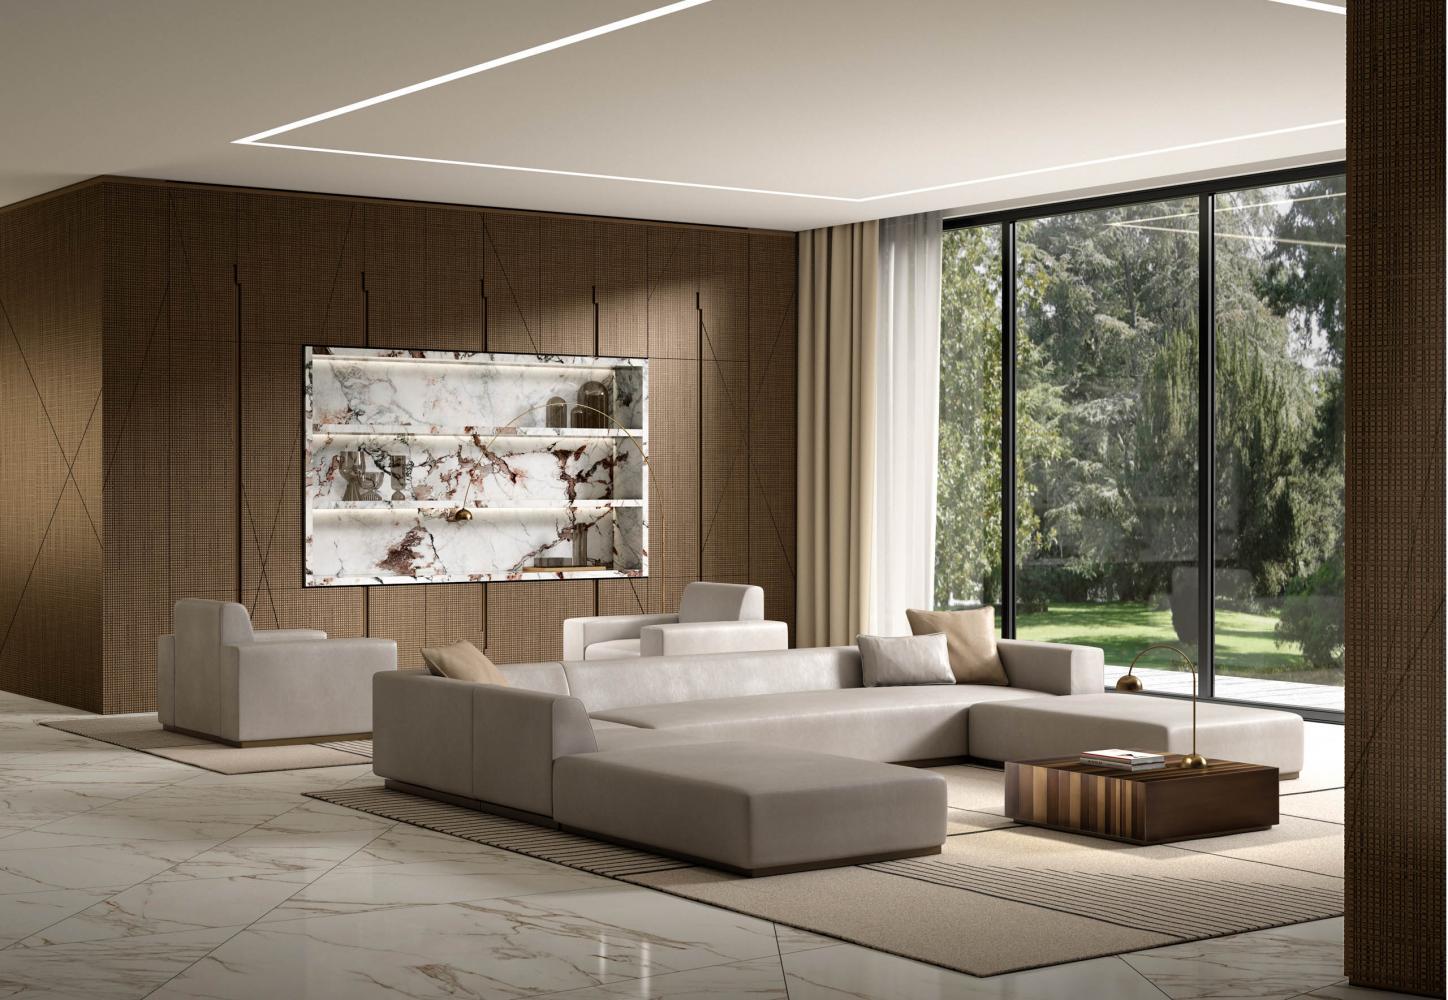 Furniture   Luxury Made to Measure Interior Design   Laurameroni